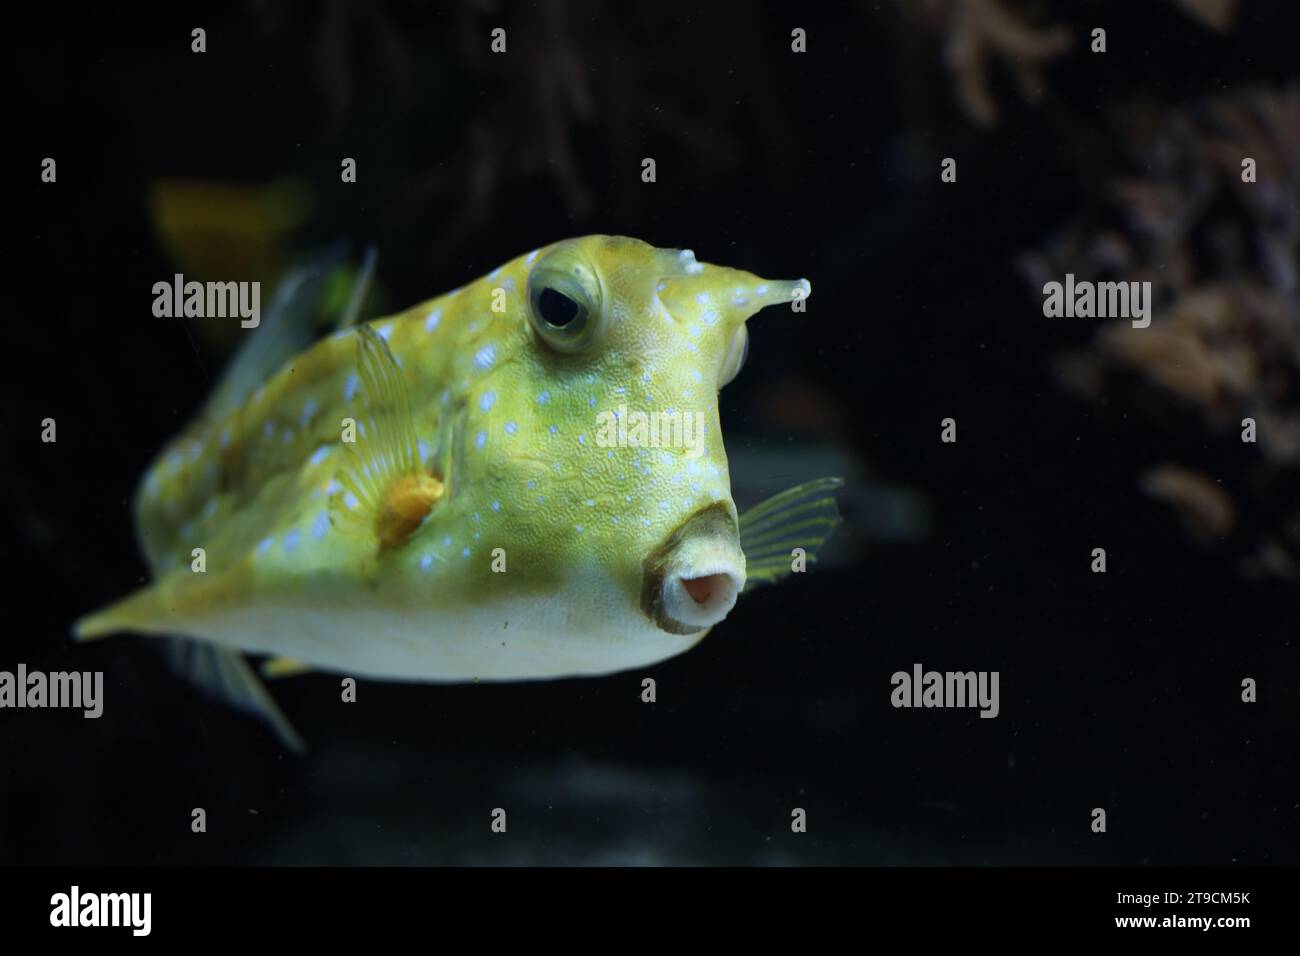 Horned trunckfish in water bassin in Ouwehands in Rhenen the Netherlands Stock Photo